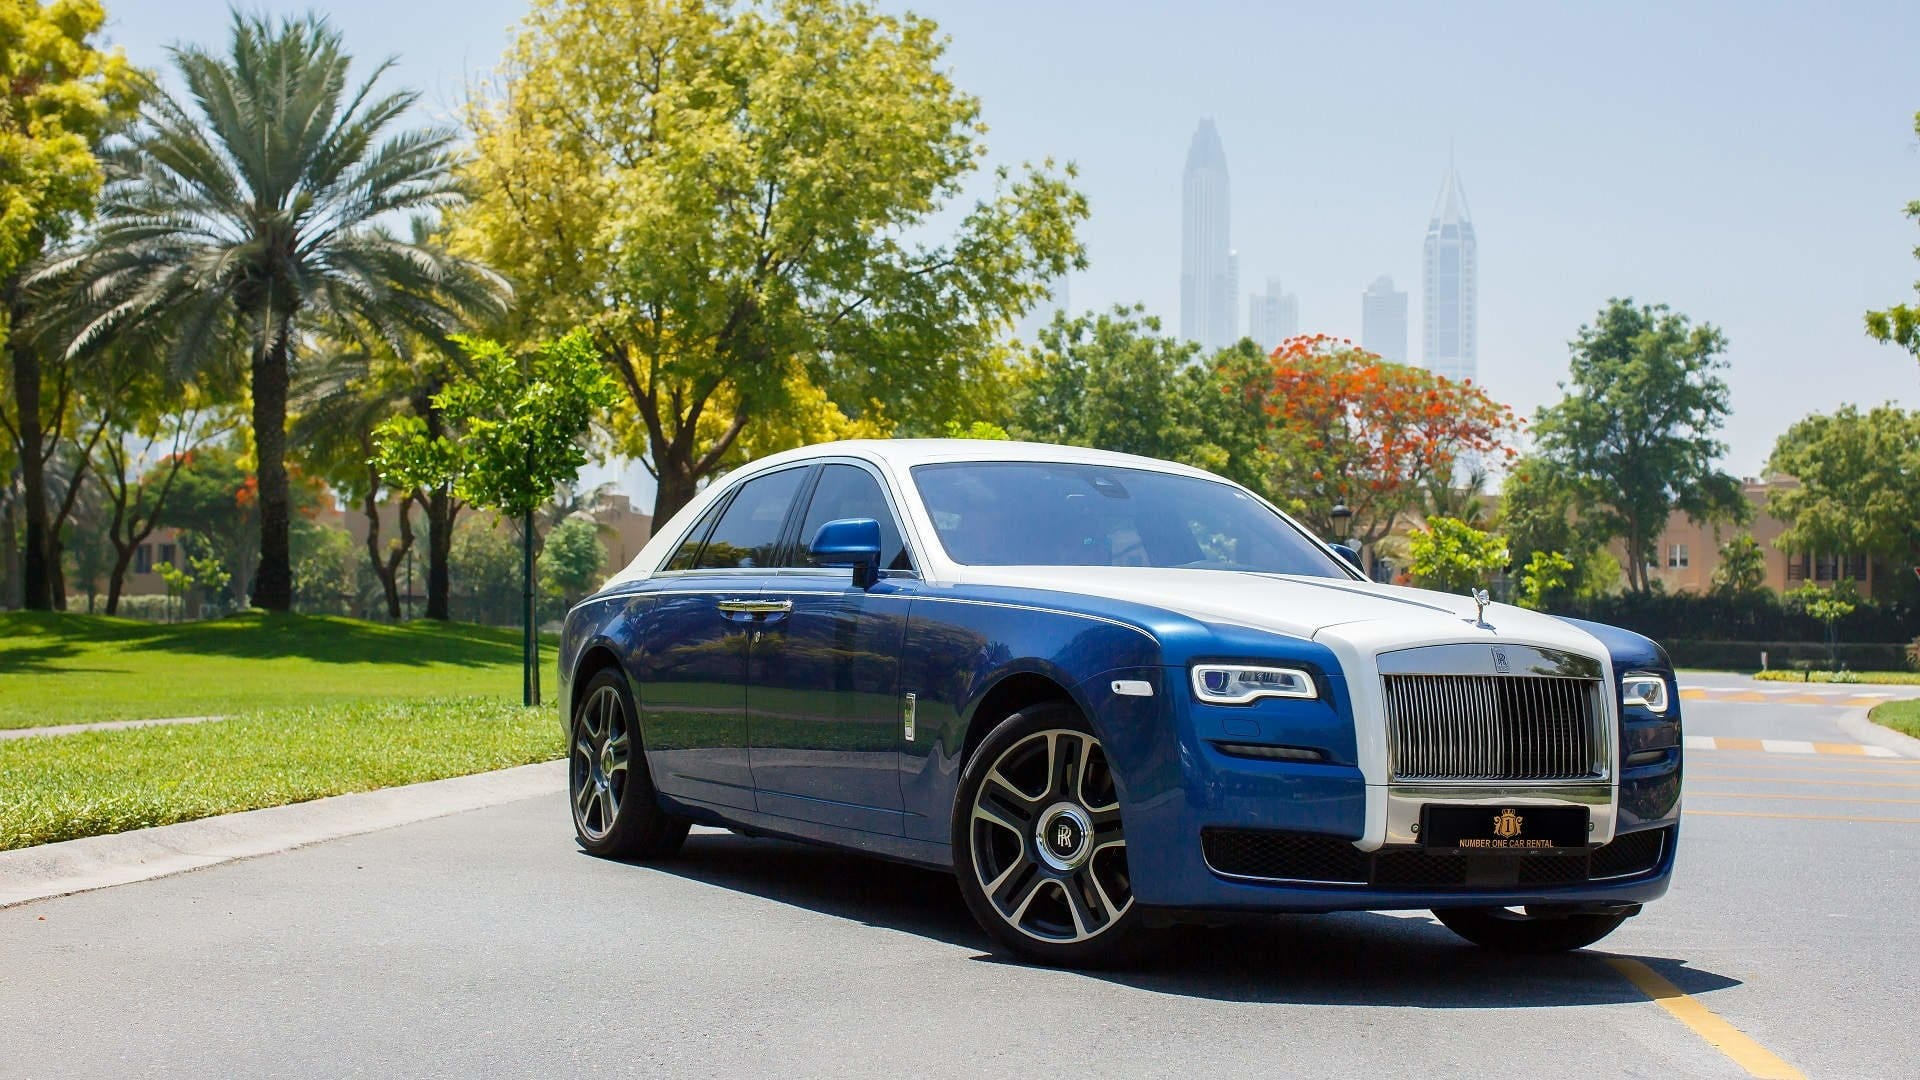 NEW Rolls-Royce Ghost: The ULTIMATE Luxury Car? 4K 